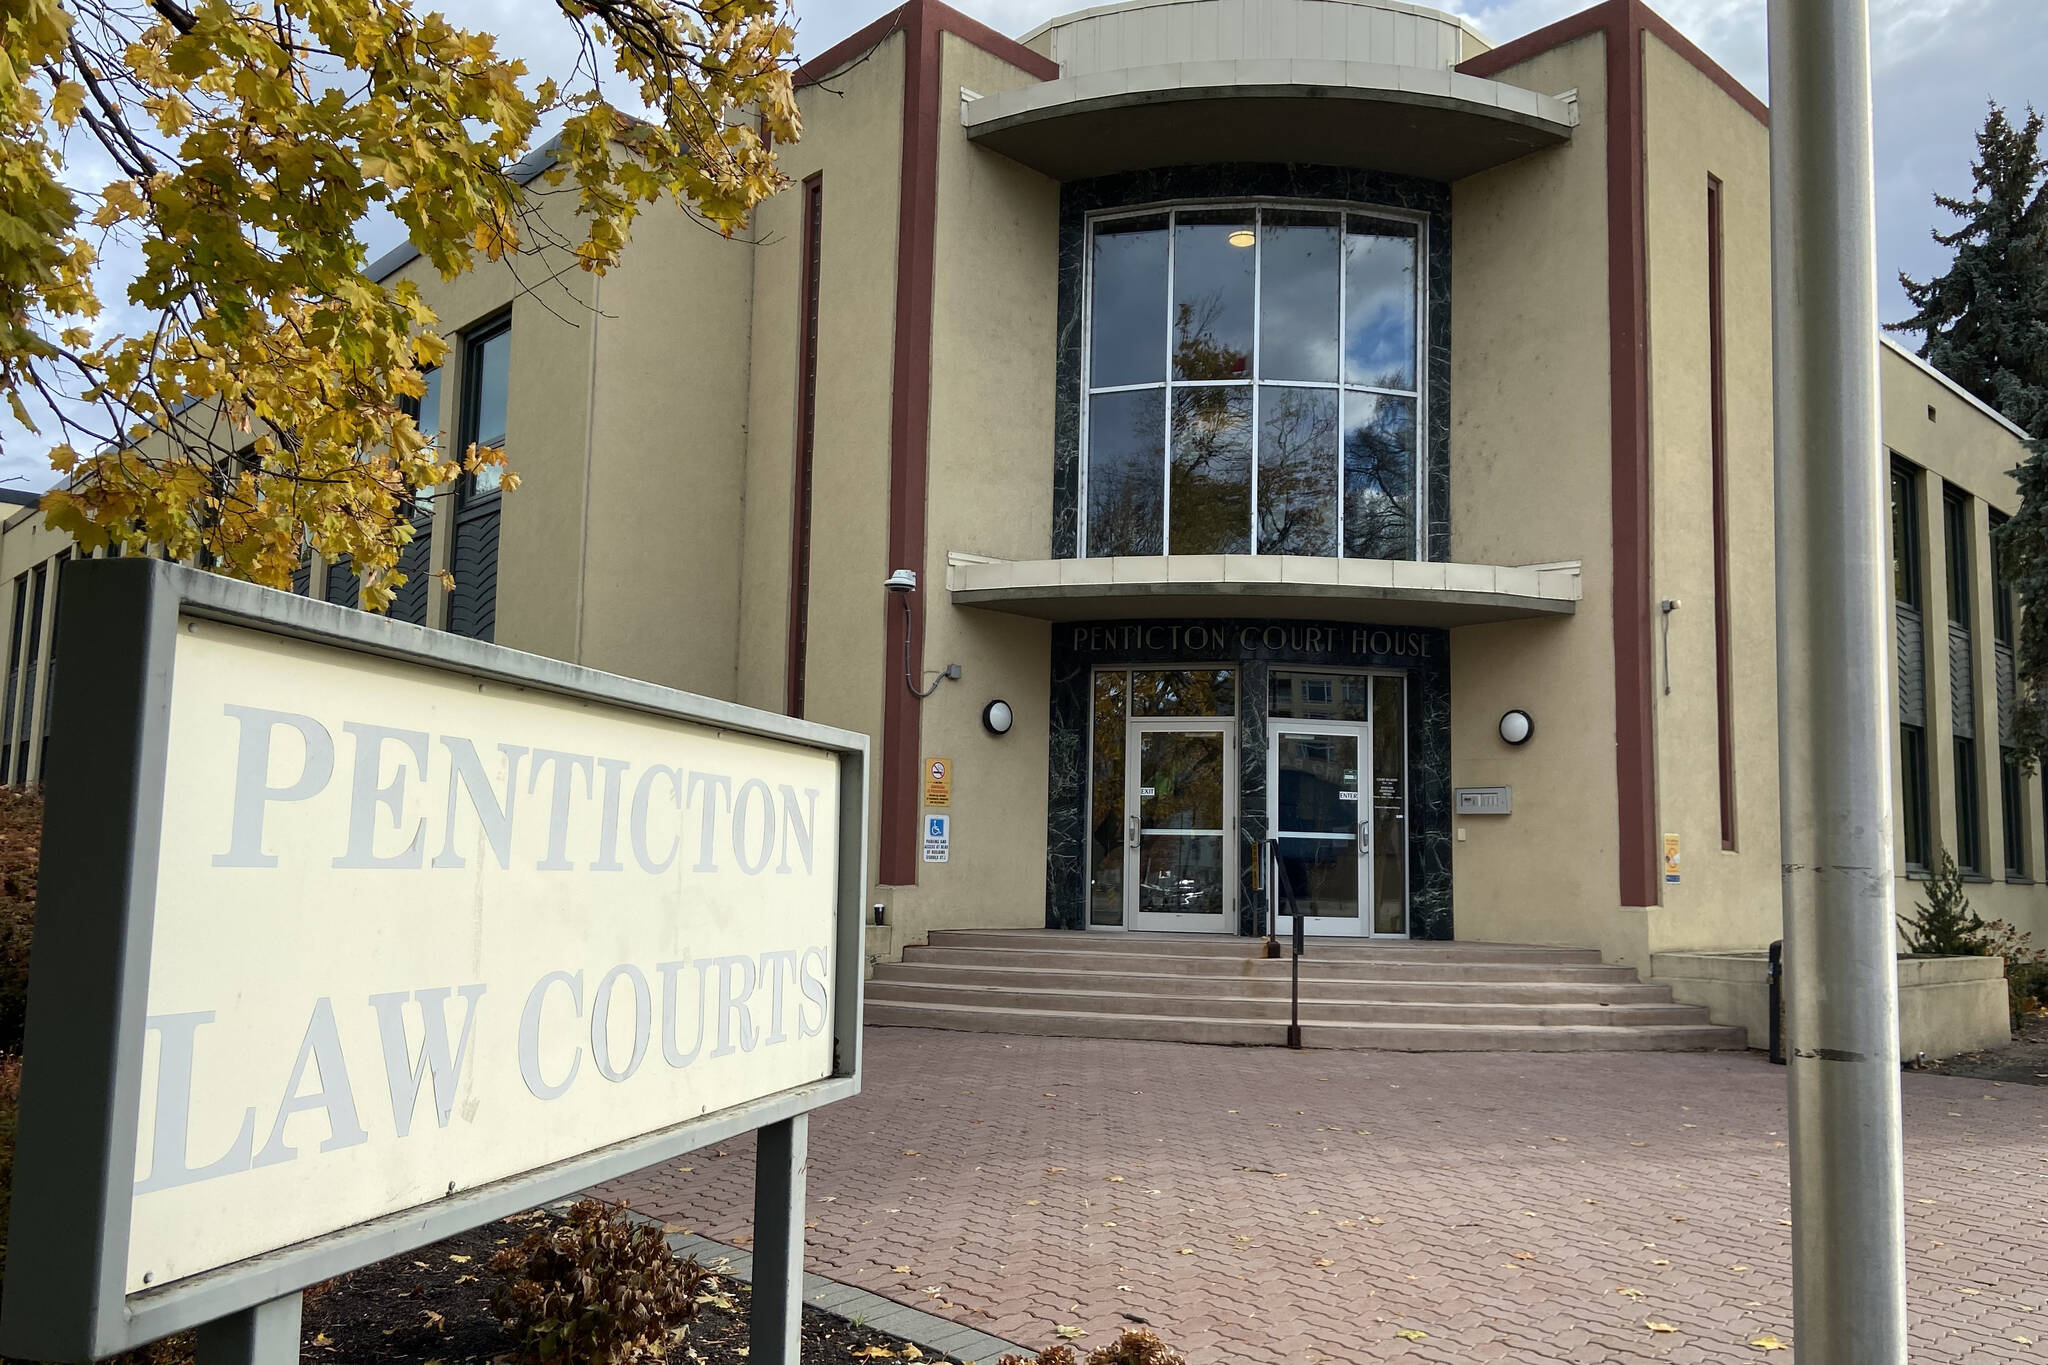 Penticton's Law Courts. (Monique Tamminga - Western News)